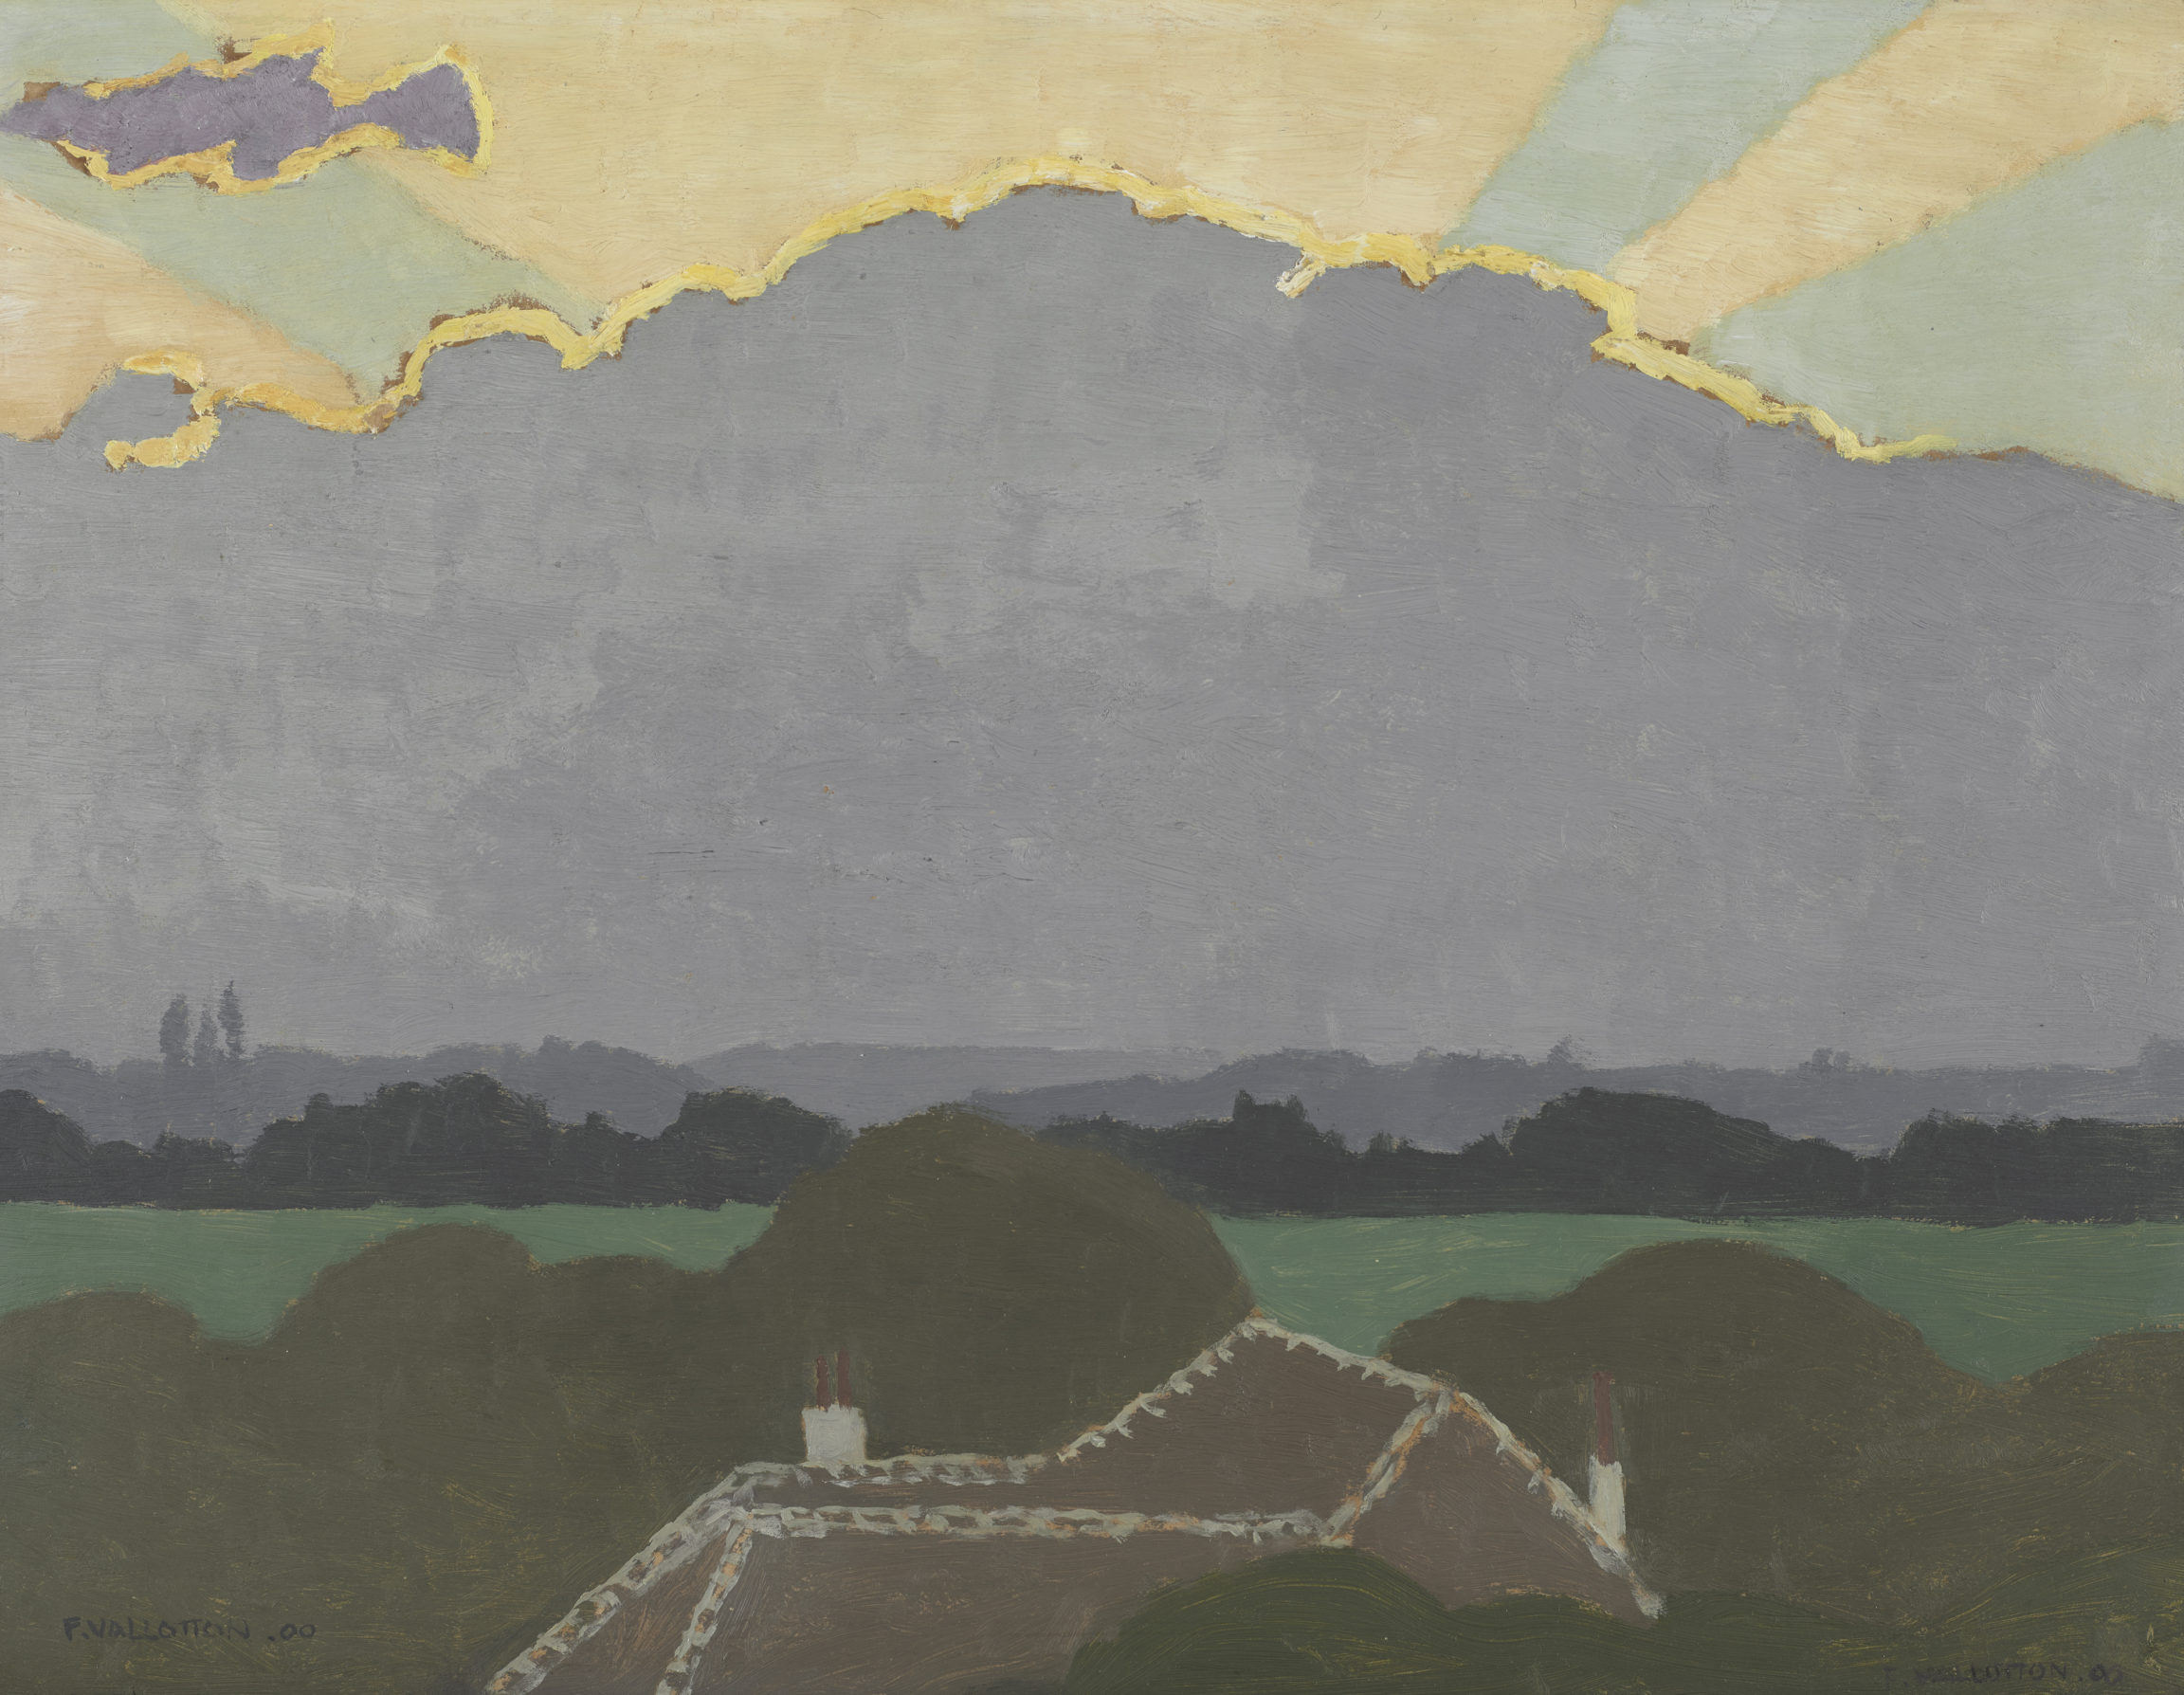 Félix Vallotton, Le grand nuage (The Great Cloud), 1900